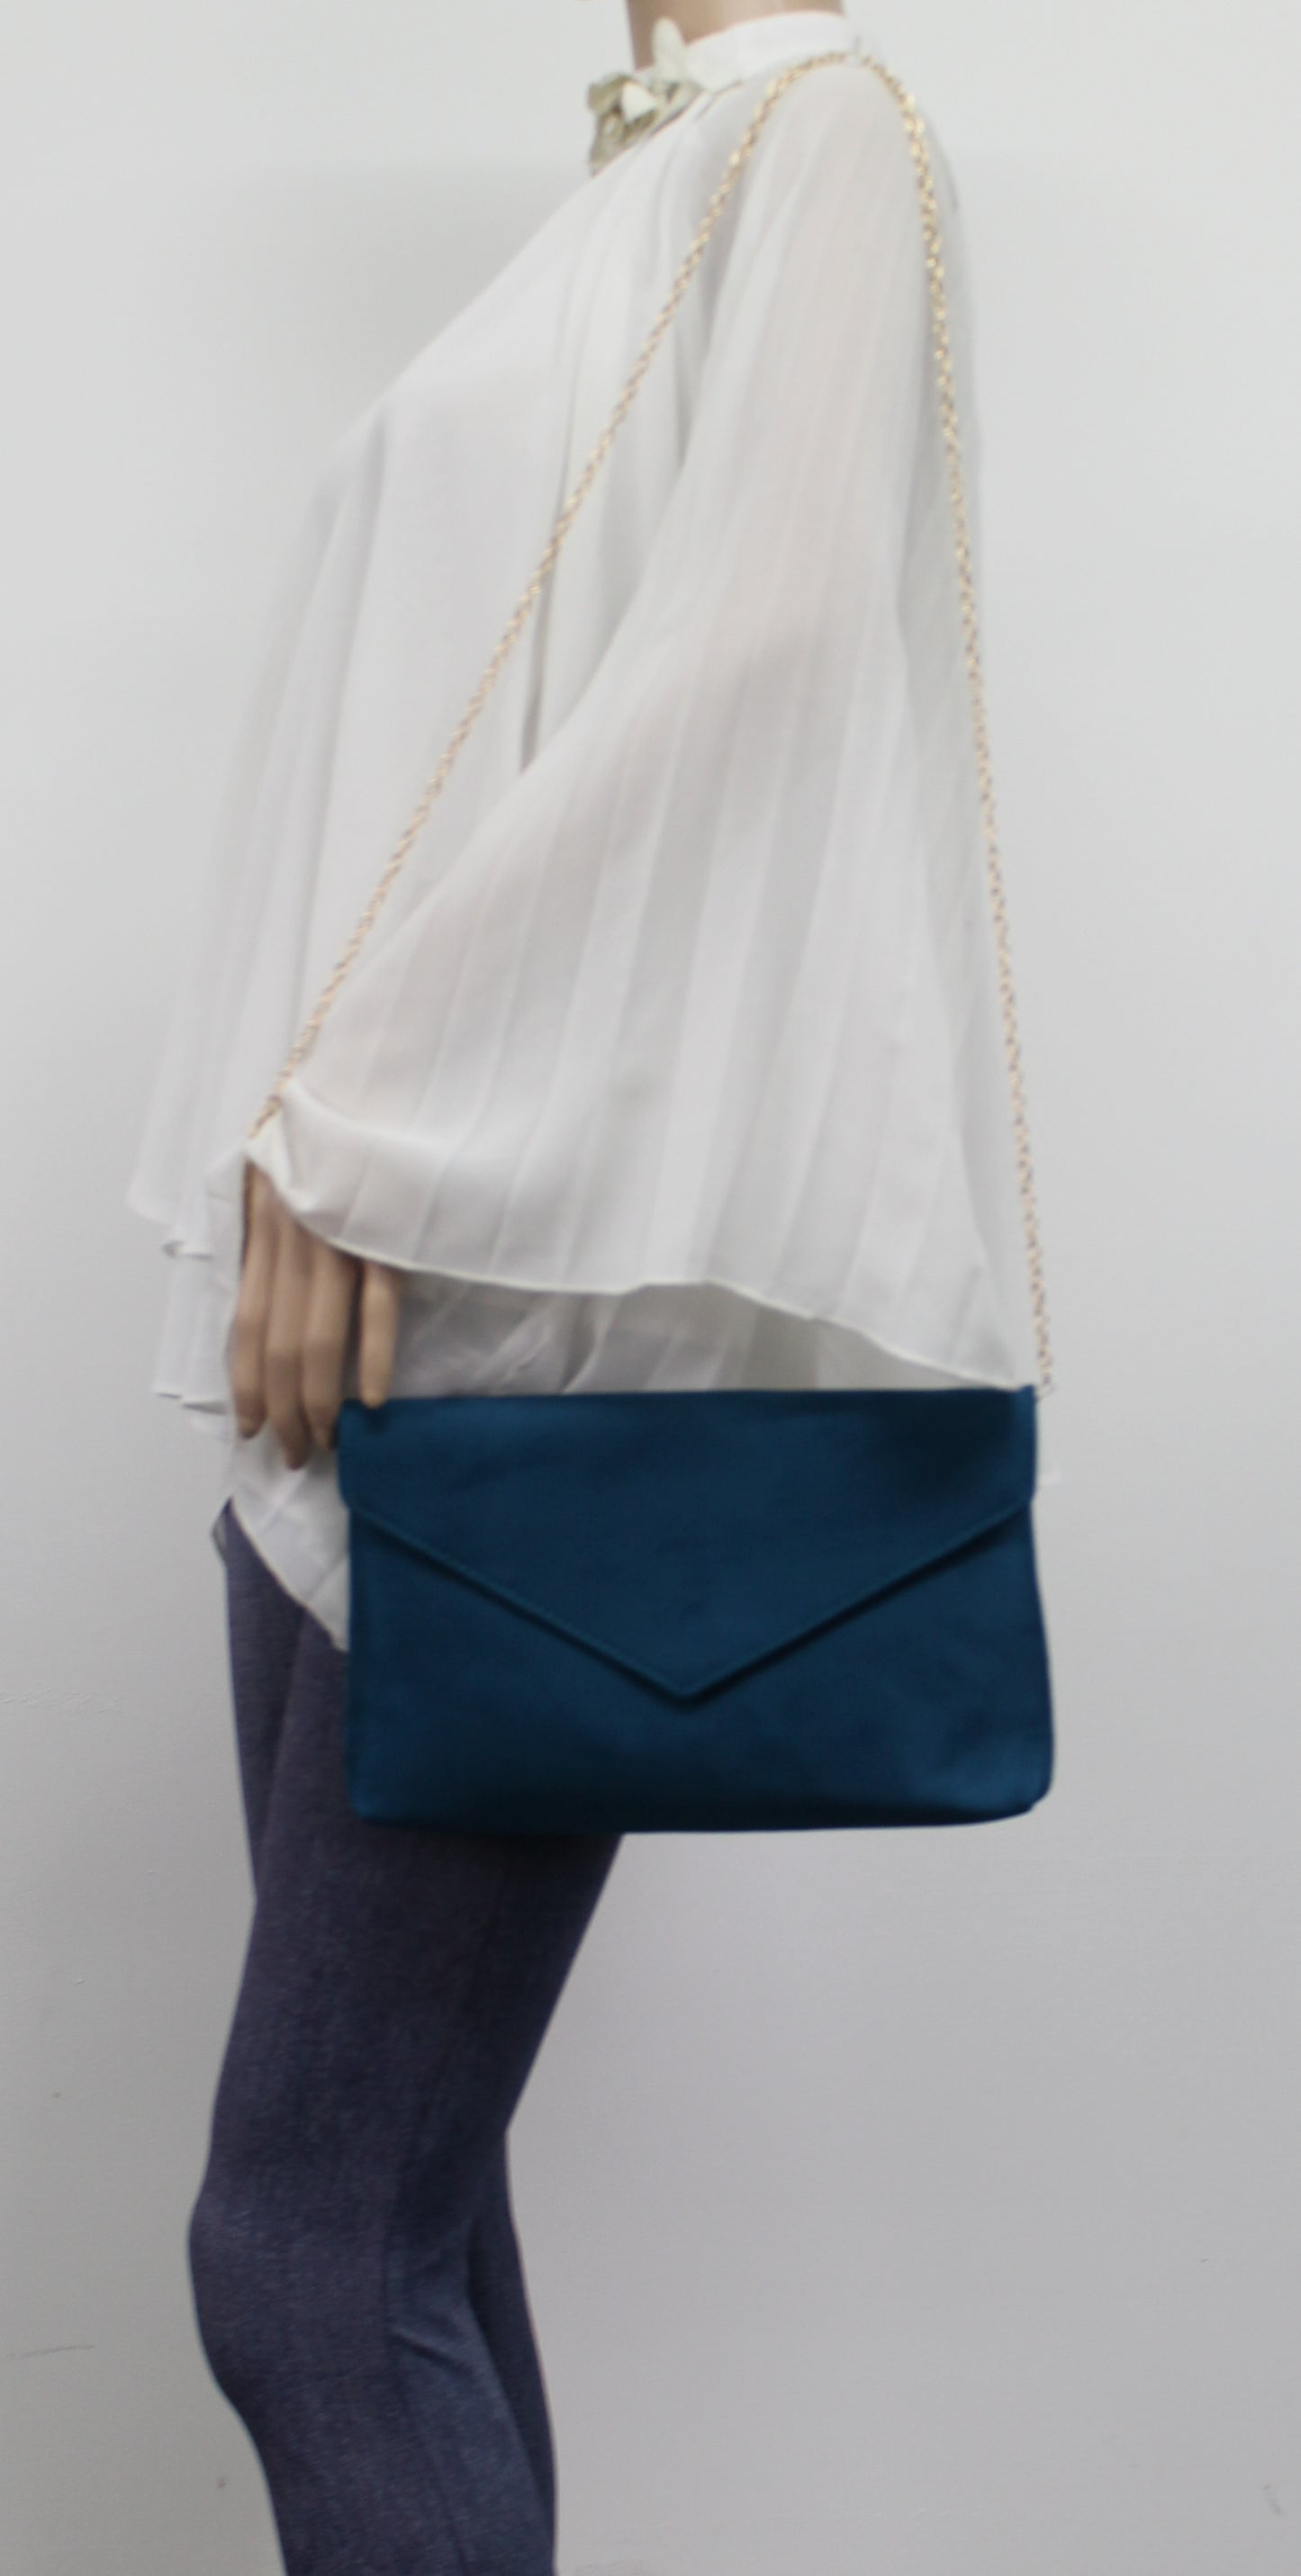 SWANKYSWANS Rosa Clutch Bag Teal Cute Cheap Clutch Bag For Weddings School and Work